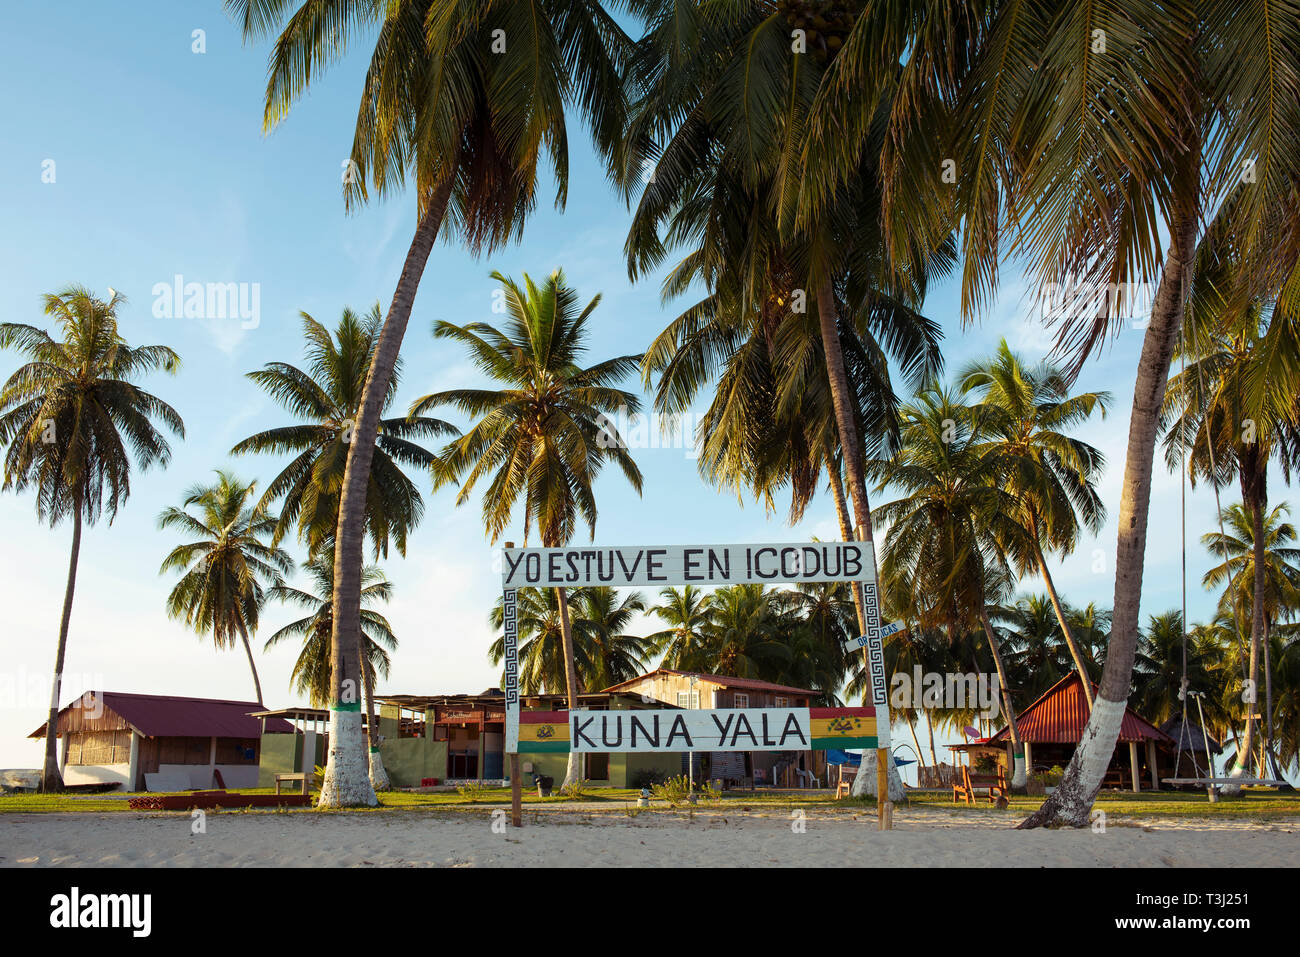 Welcome to Icodub islet (board's label: I was in Icodub, Kuna Yala). San Blas Islands. Panama, Central America. Oct 2018 Stock Photo